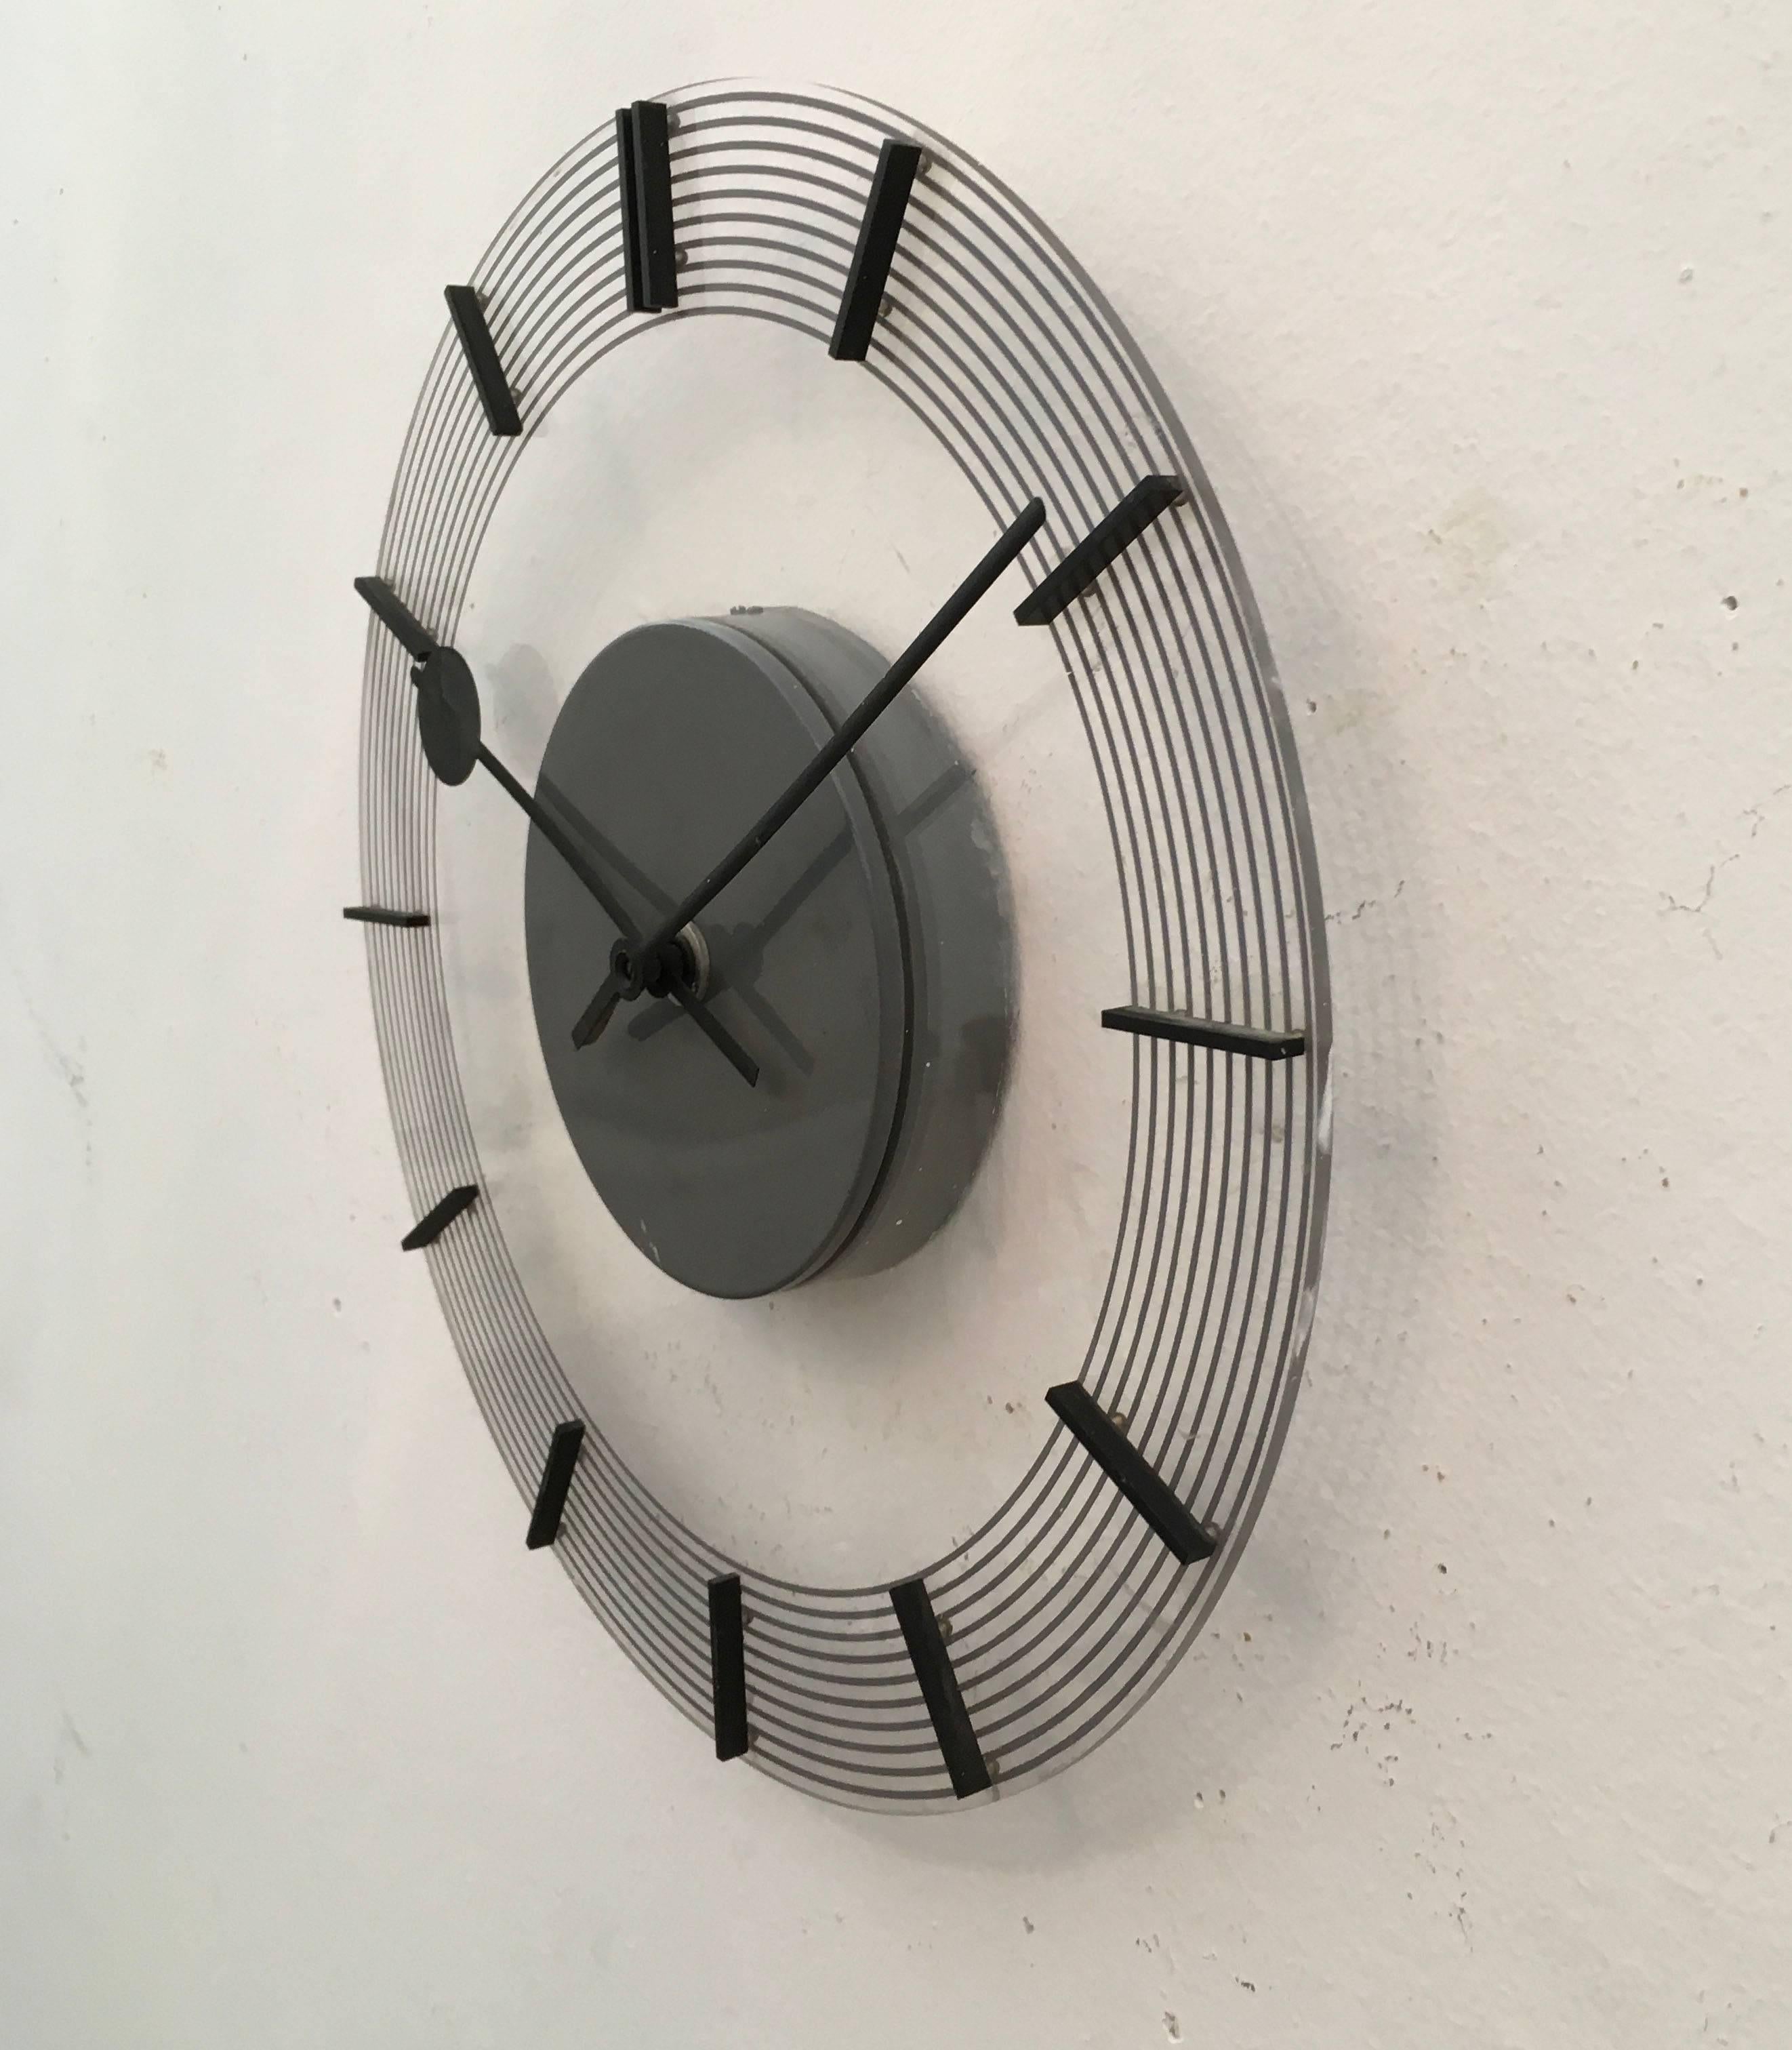 Siemens Halske Factory or Workshop Wall Clock In Excellent Condition In Vienna, AT